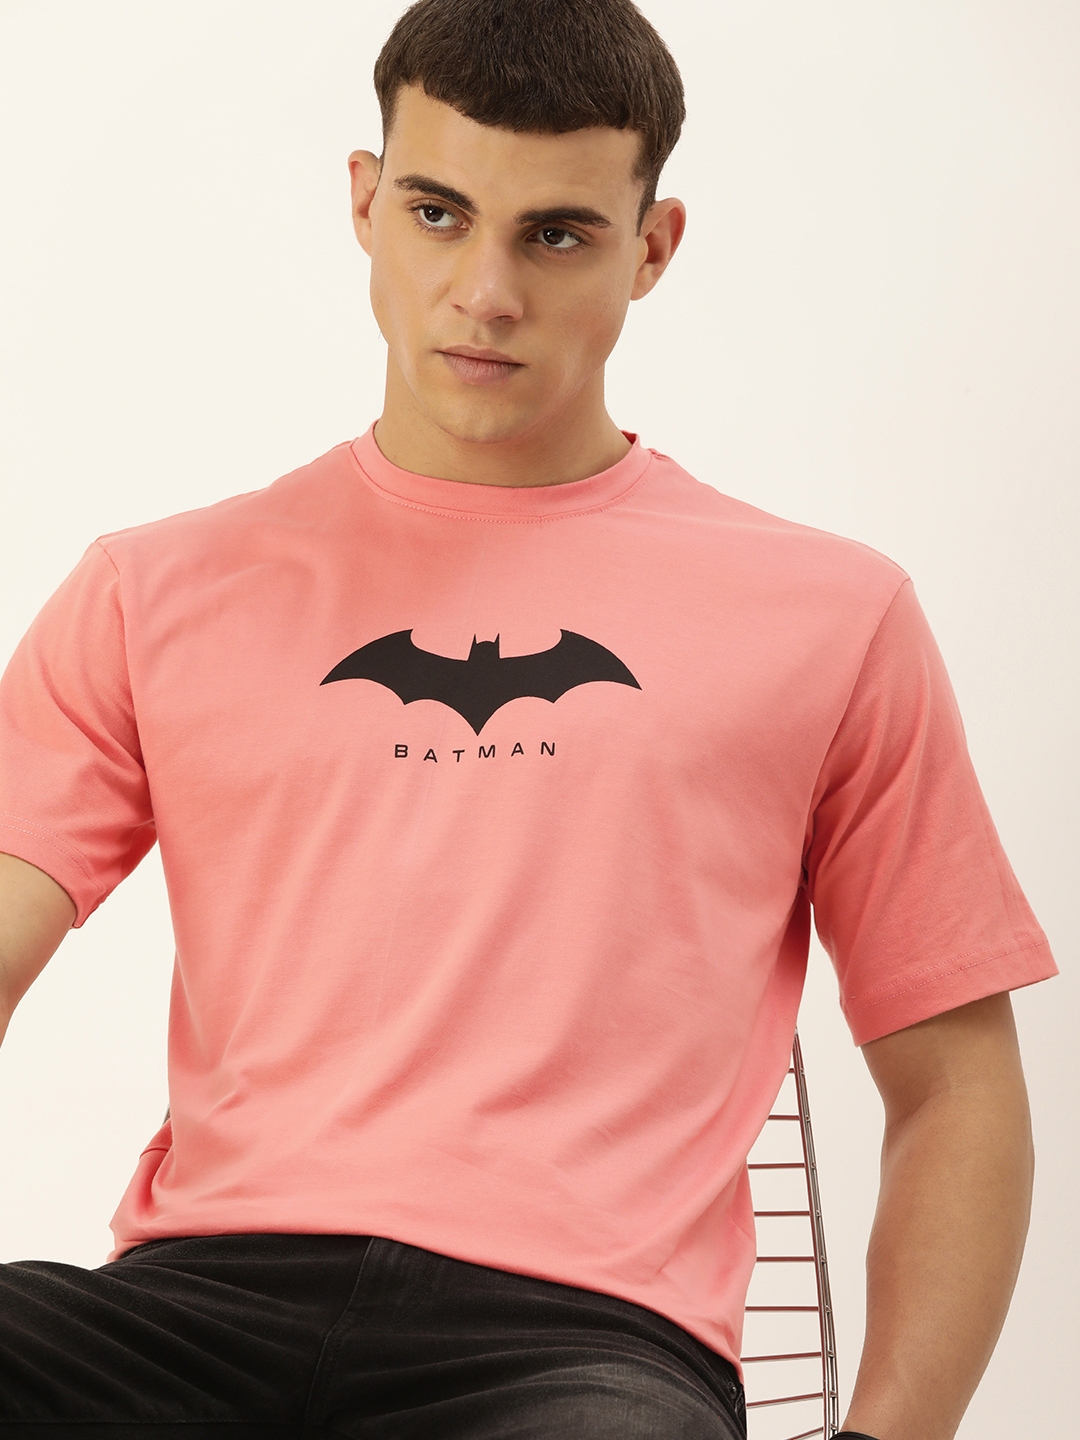 Buy Kook Keech Men Batman Printed Pure Cotton T - Tshirts for 23993098 Myntra